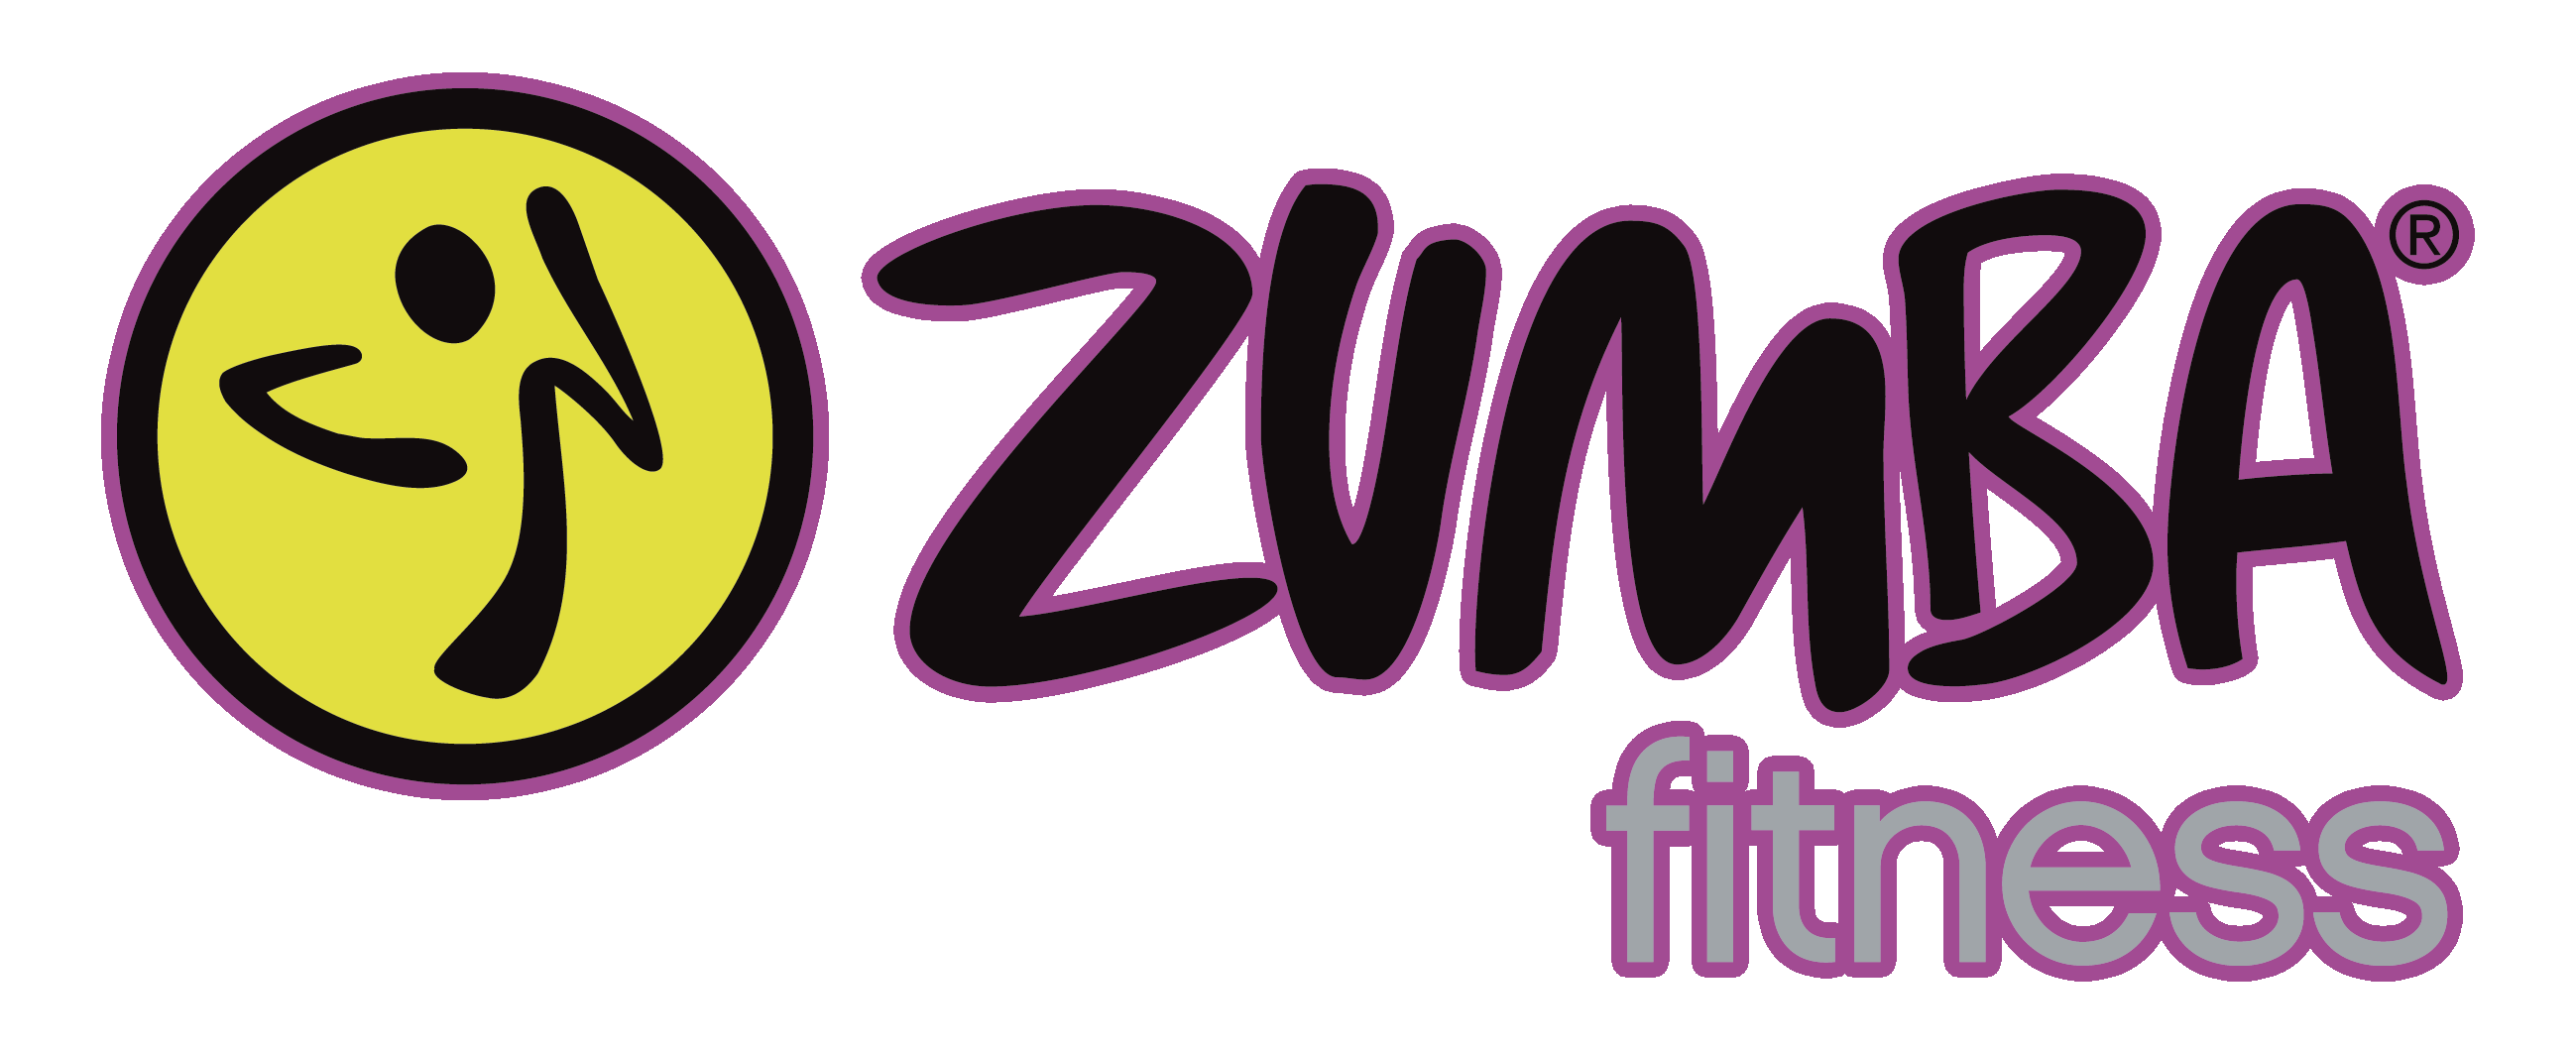 zumba fitness - Clip Art Library